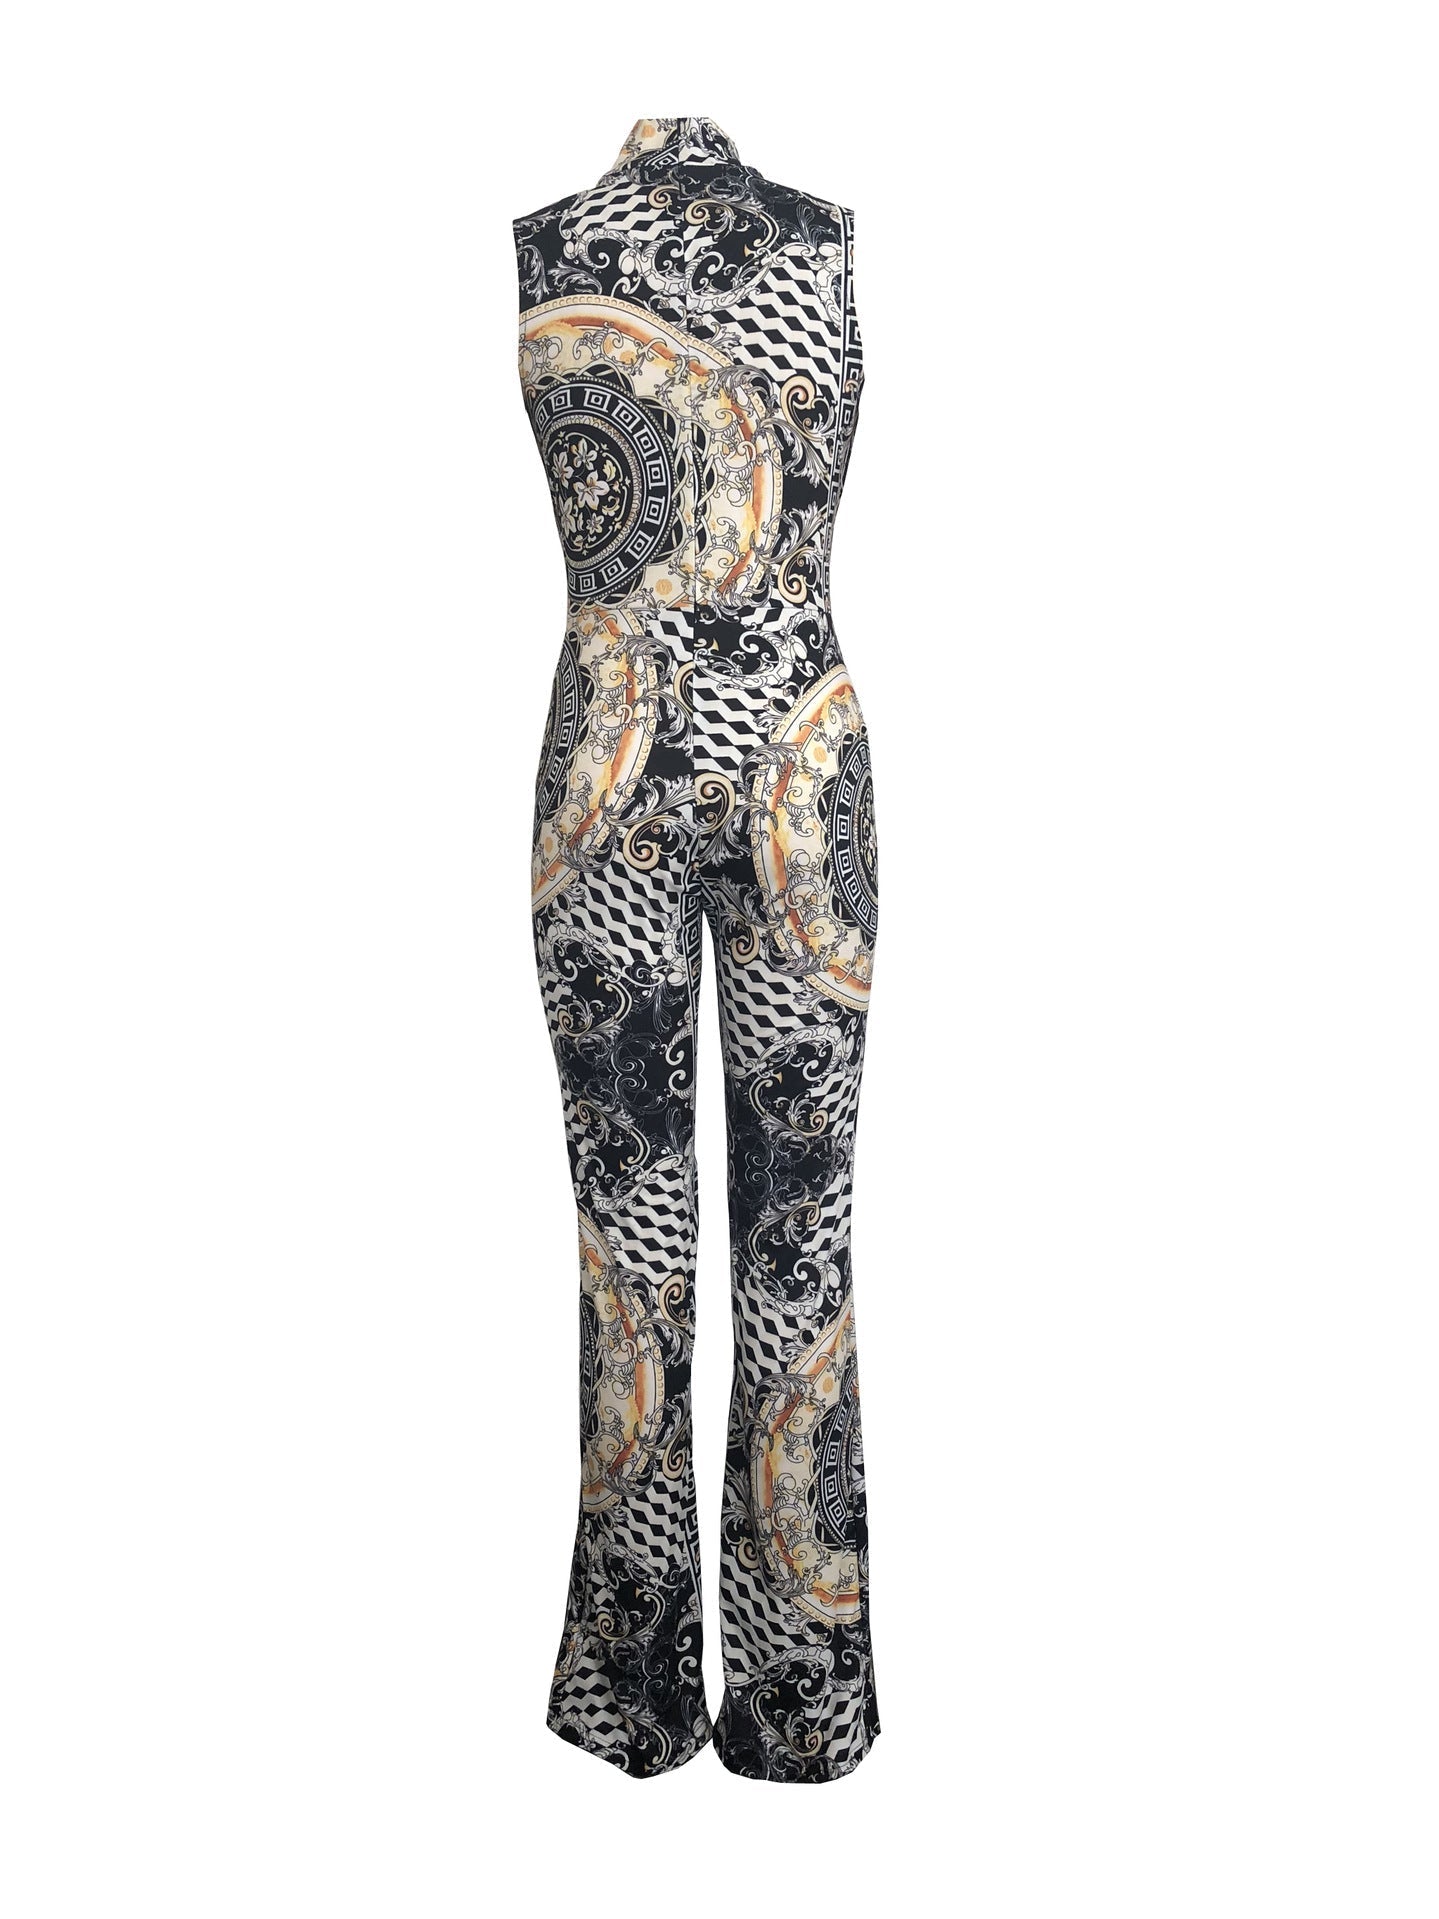 Abstract Print Sleeveless Women's Jumpsuit GlamzLife